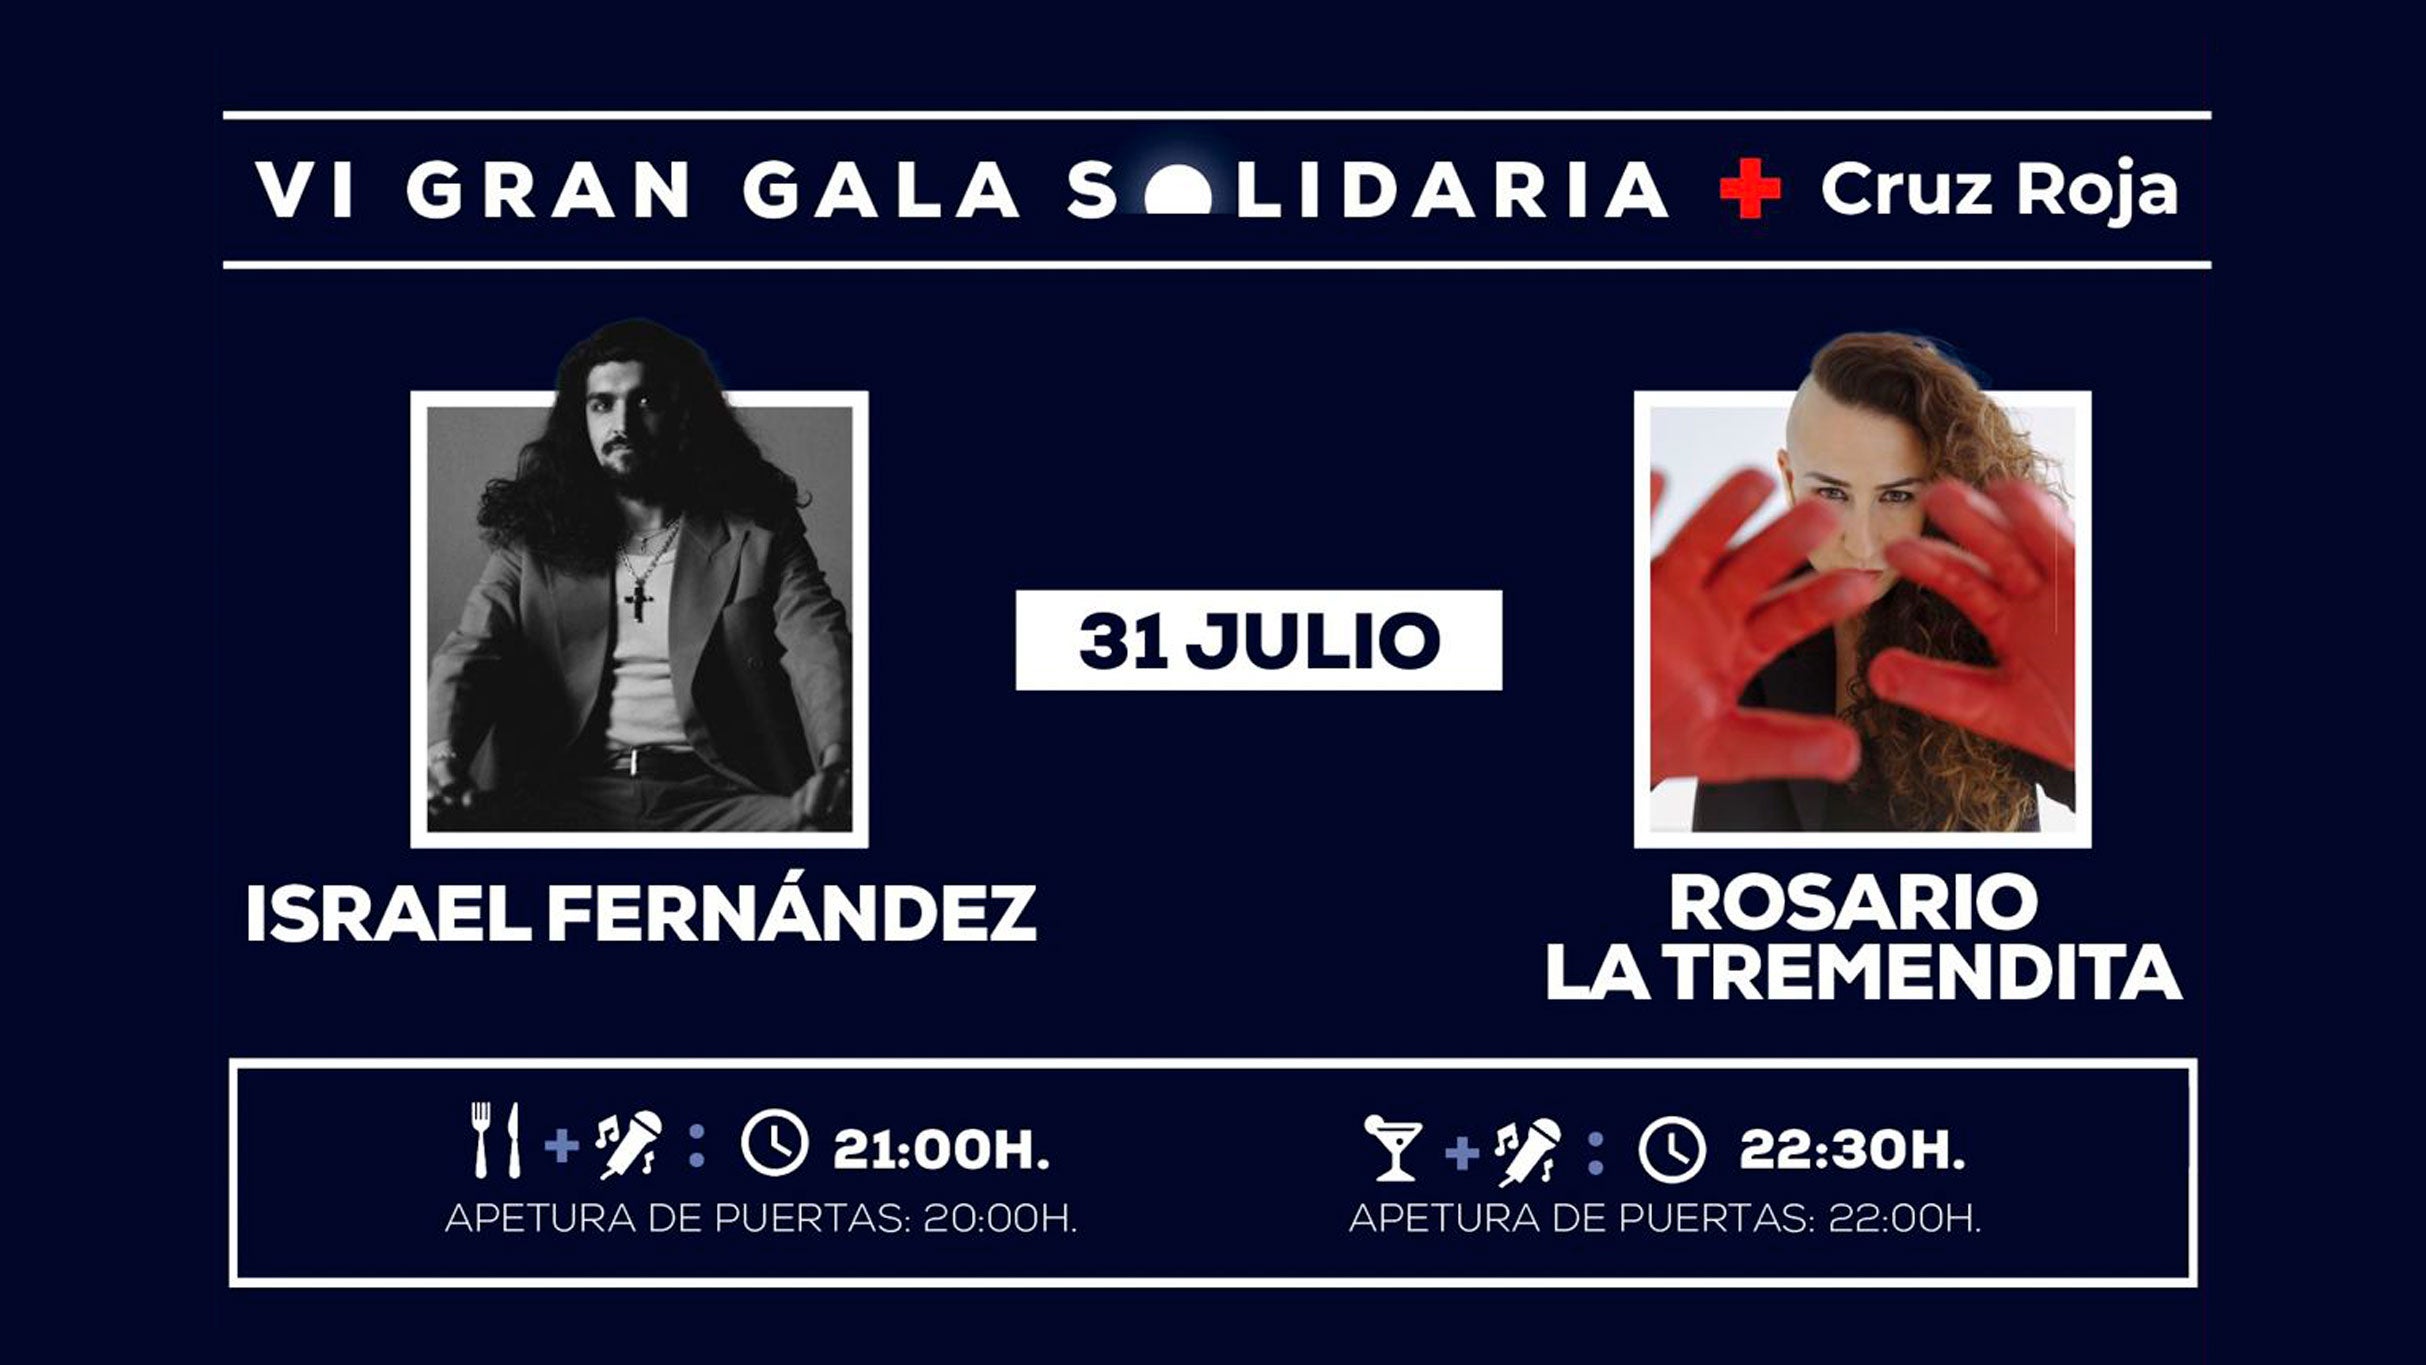 Gran Gala Solidaria Cruz Roja presale information on freepresalepasswords.com